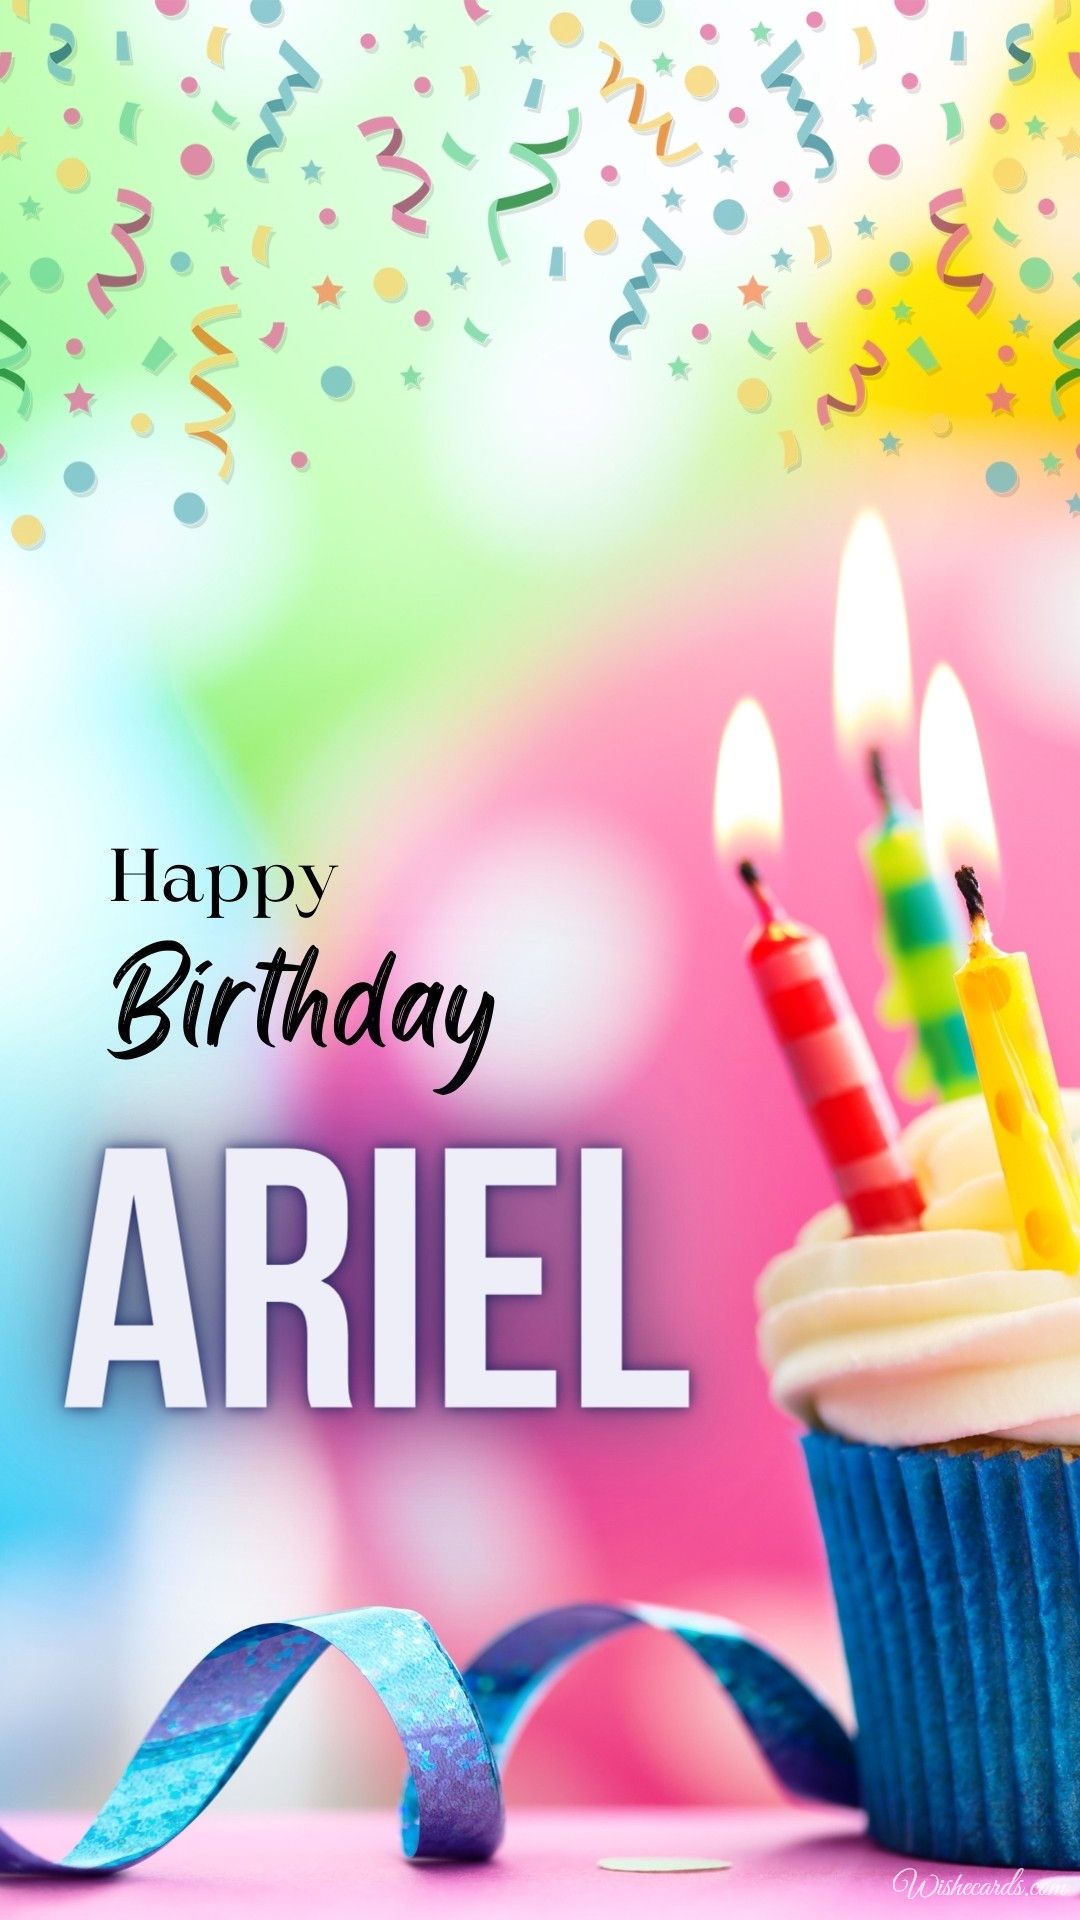 Ariel Happy Birthday Image